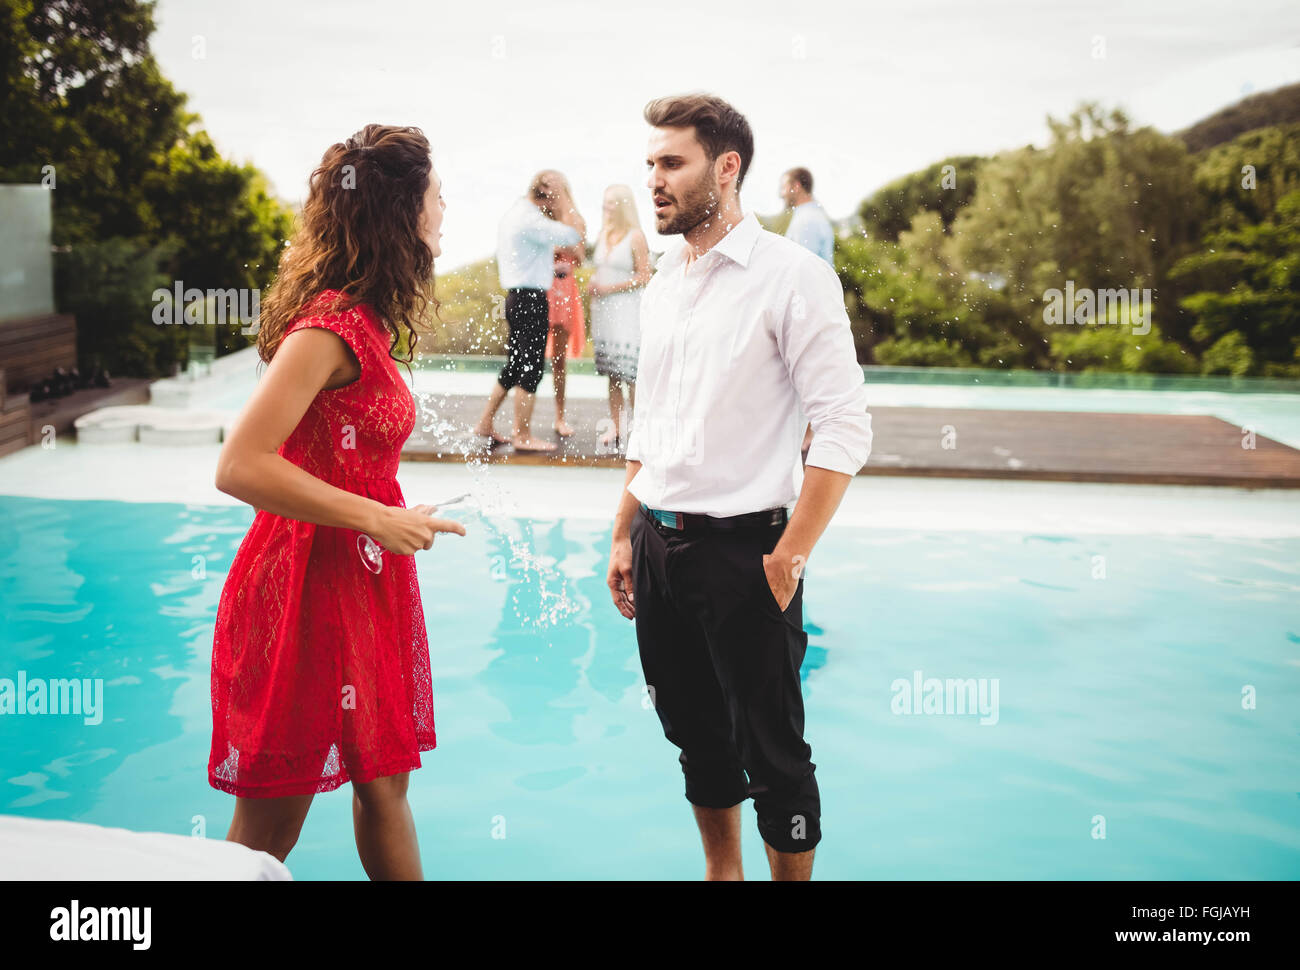 Couple in pool | Swimming pool wedding, Pool poses, Pool